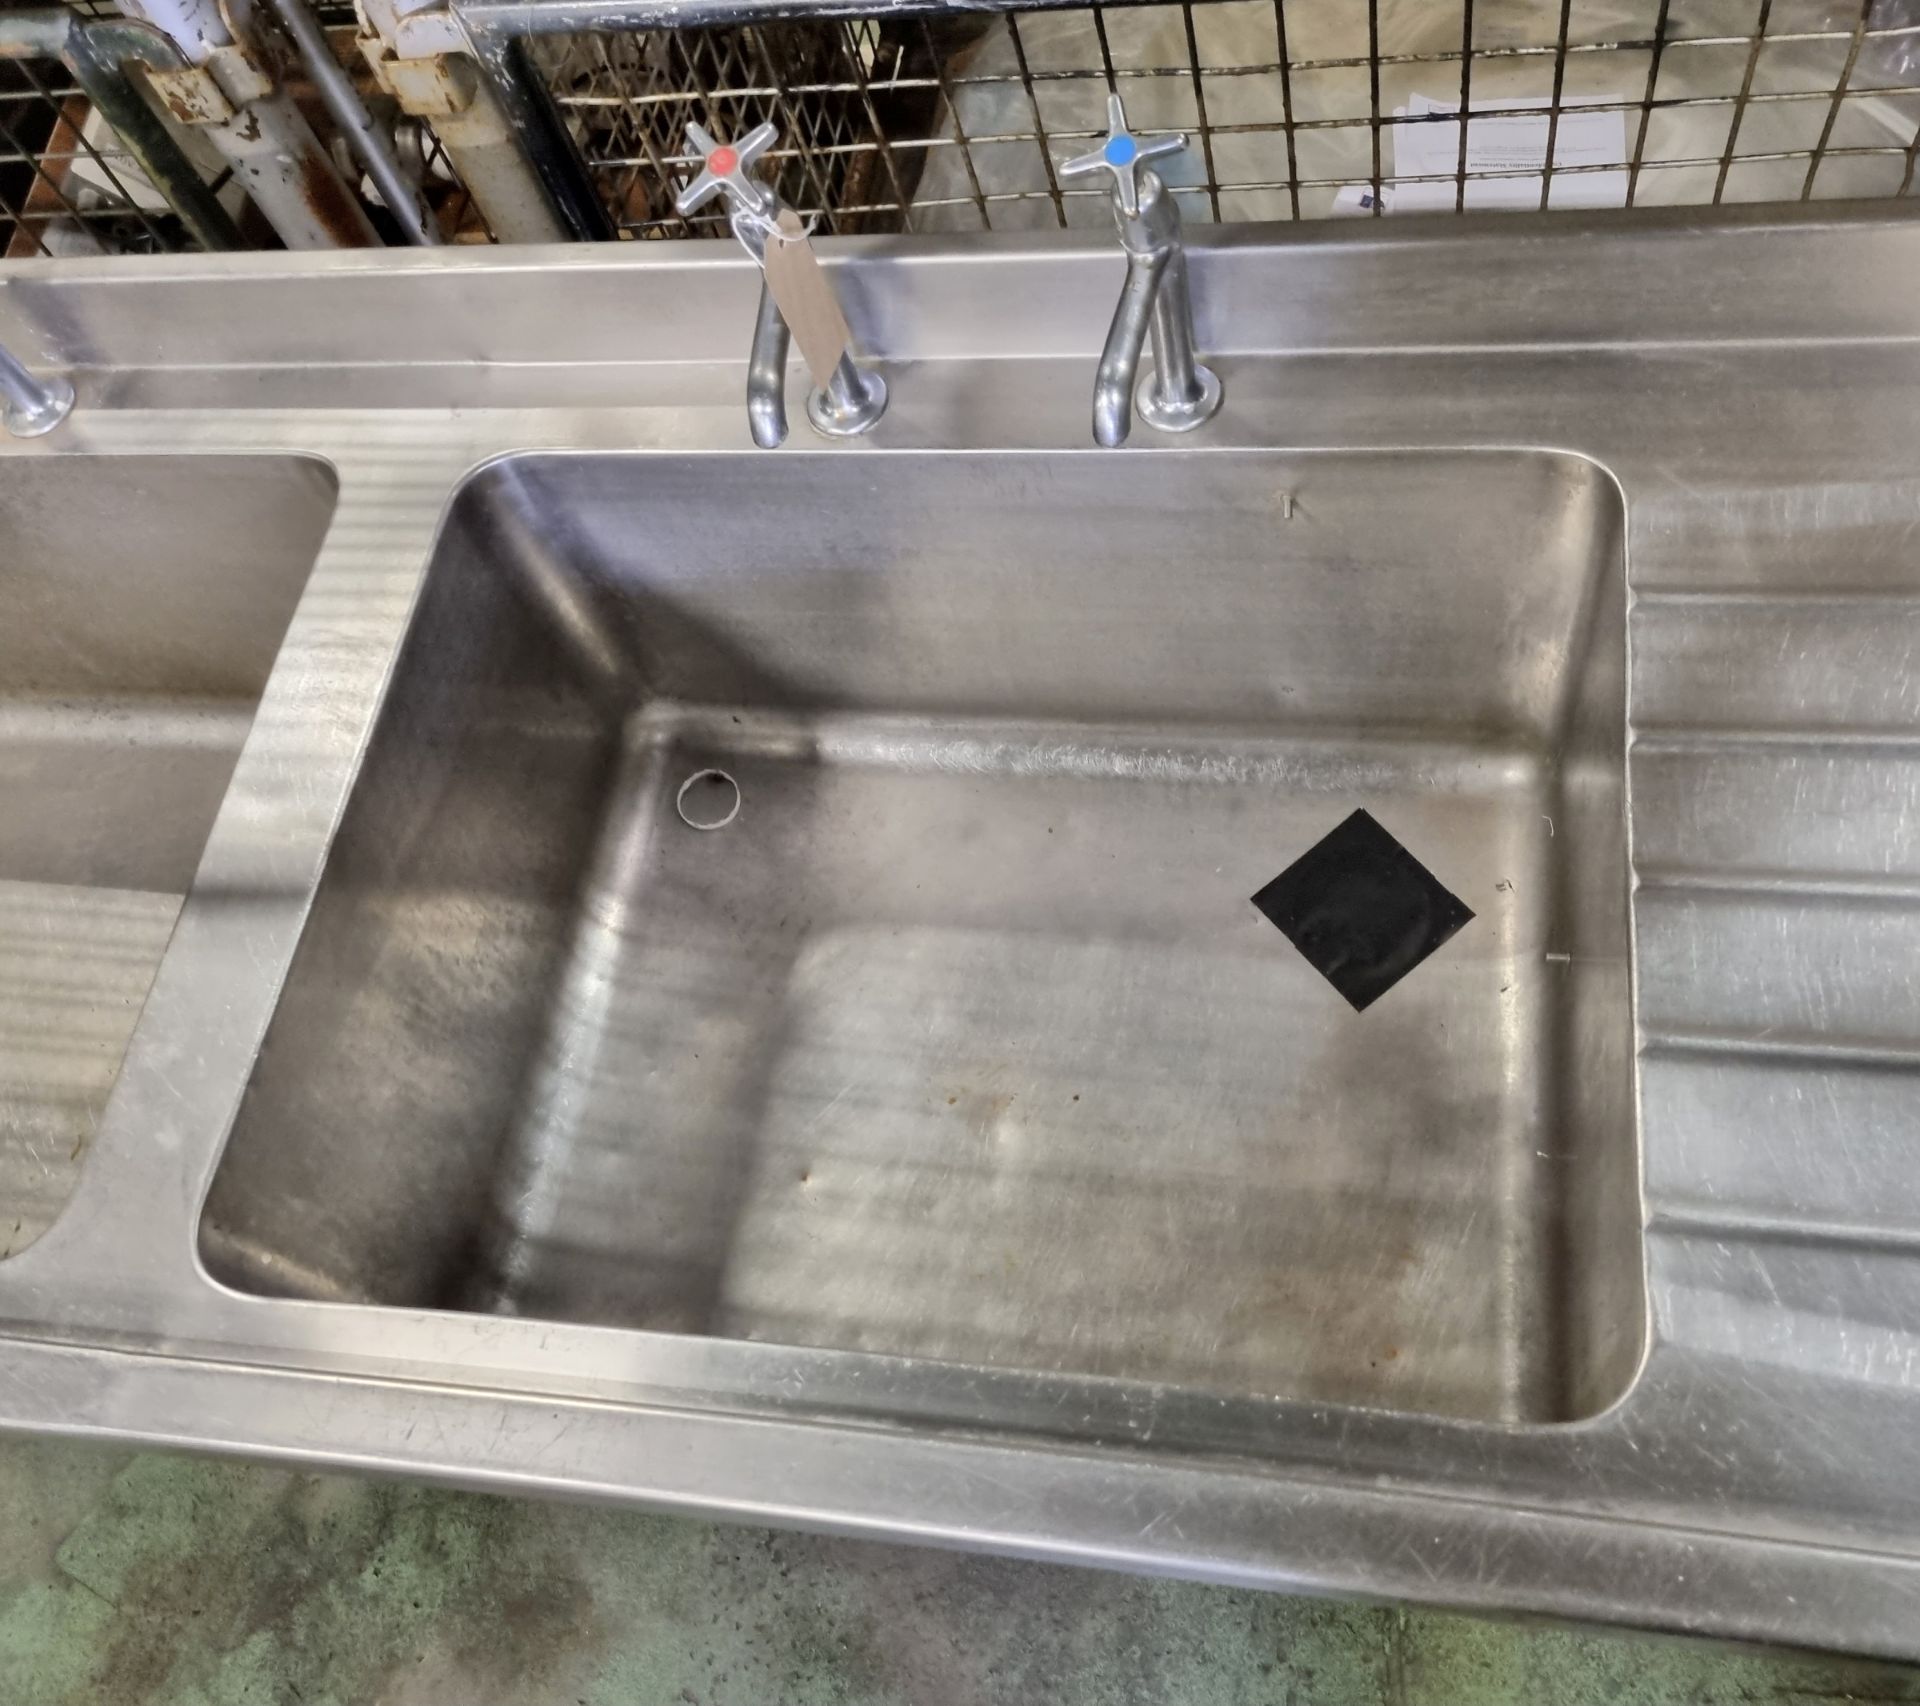 Stainless steel double sink unit with waste disposal - 330x60x90cm - Bild 4 aus 6